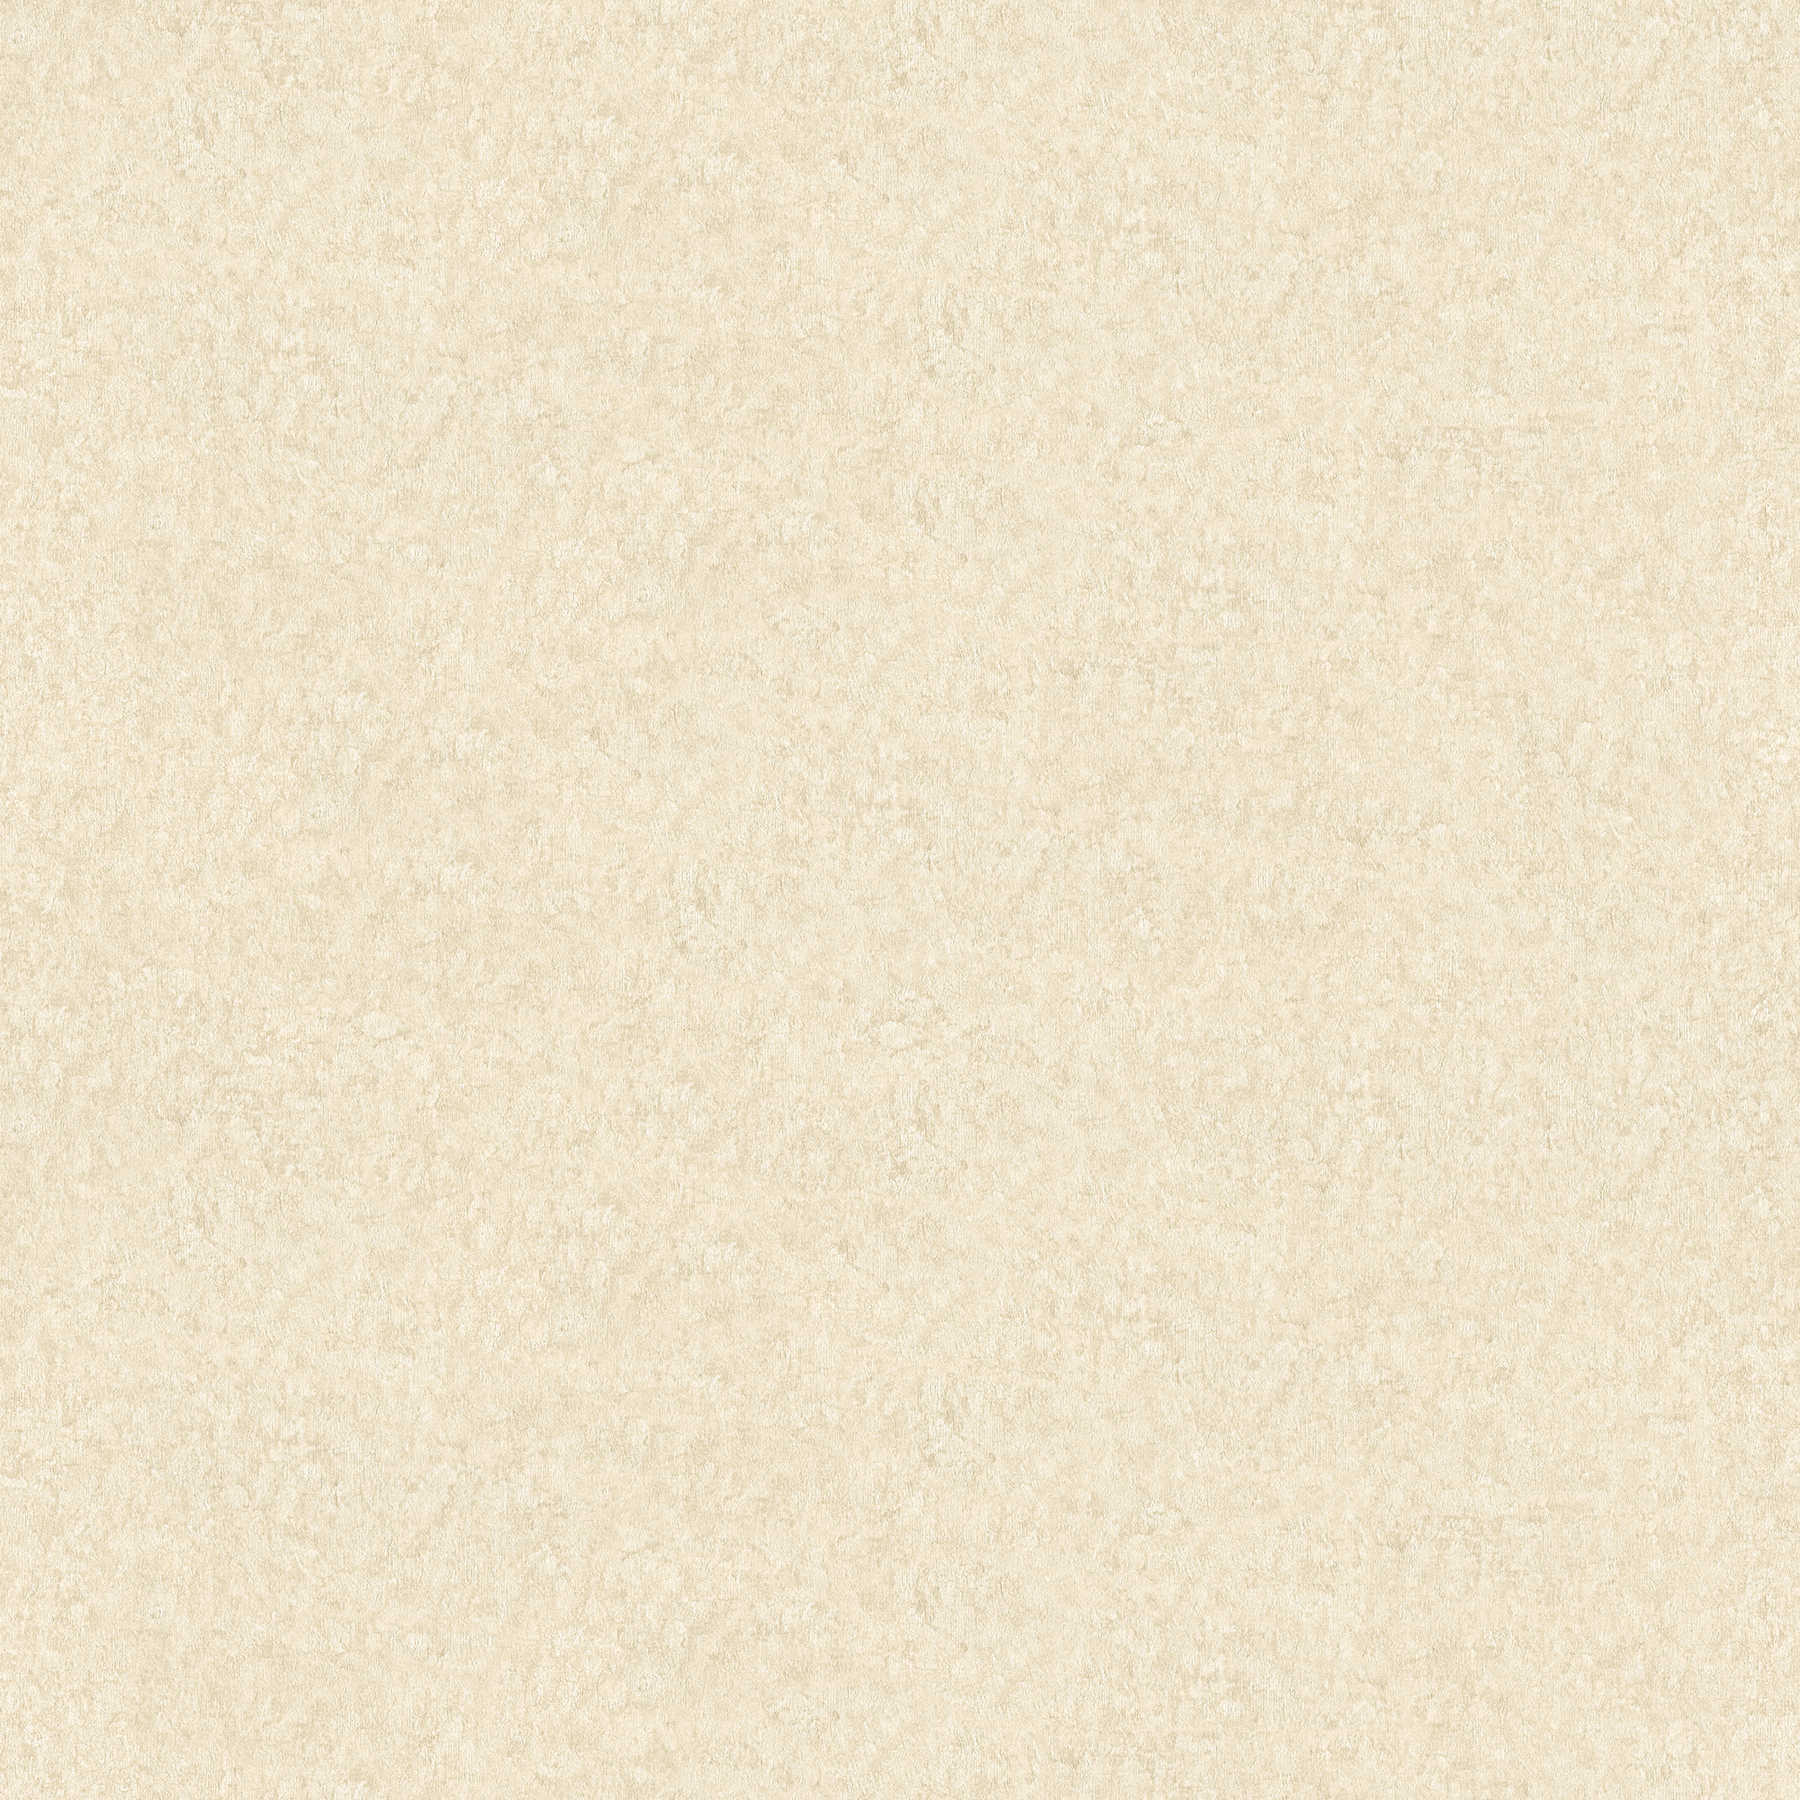             Premium wallpaper plain & matt - beige
        